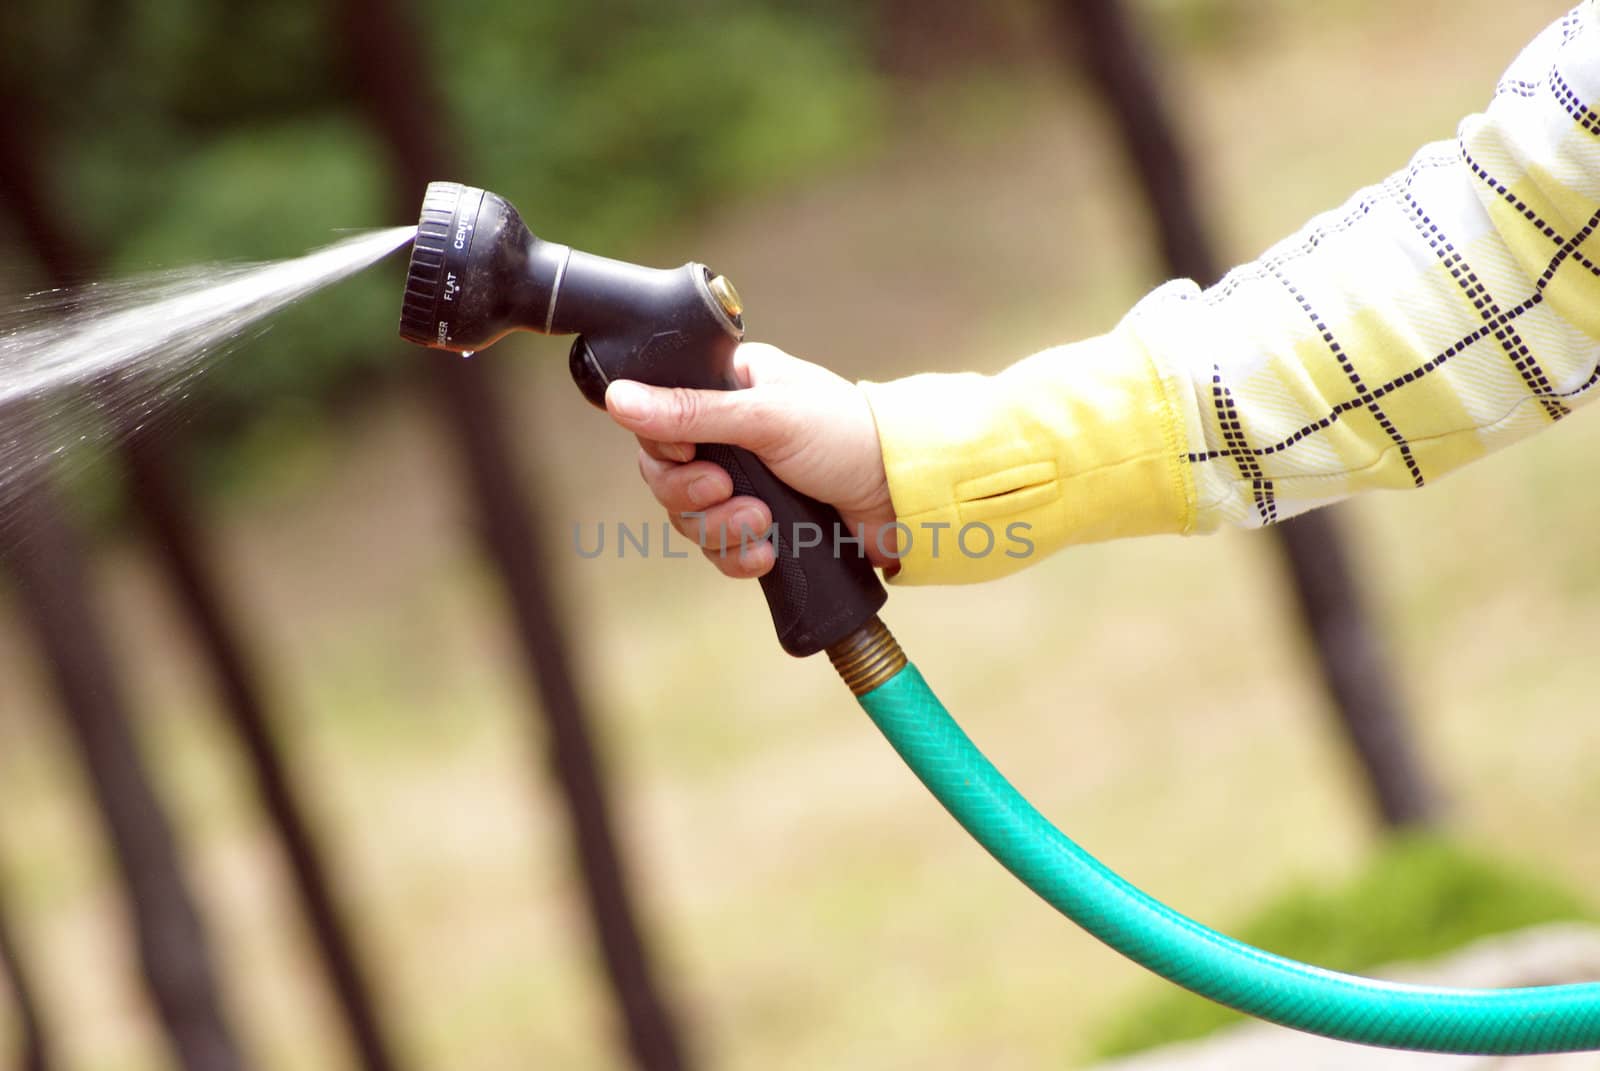 A woman uses the hose while she's outside.